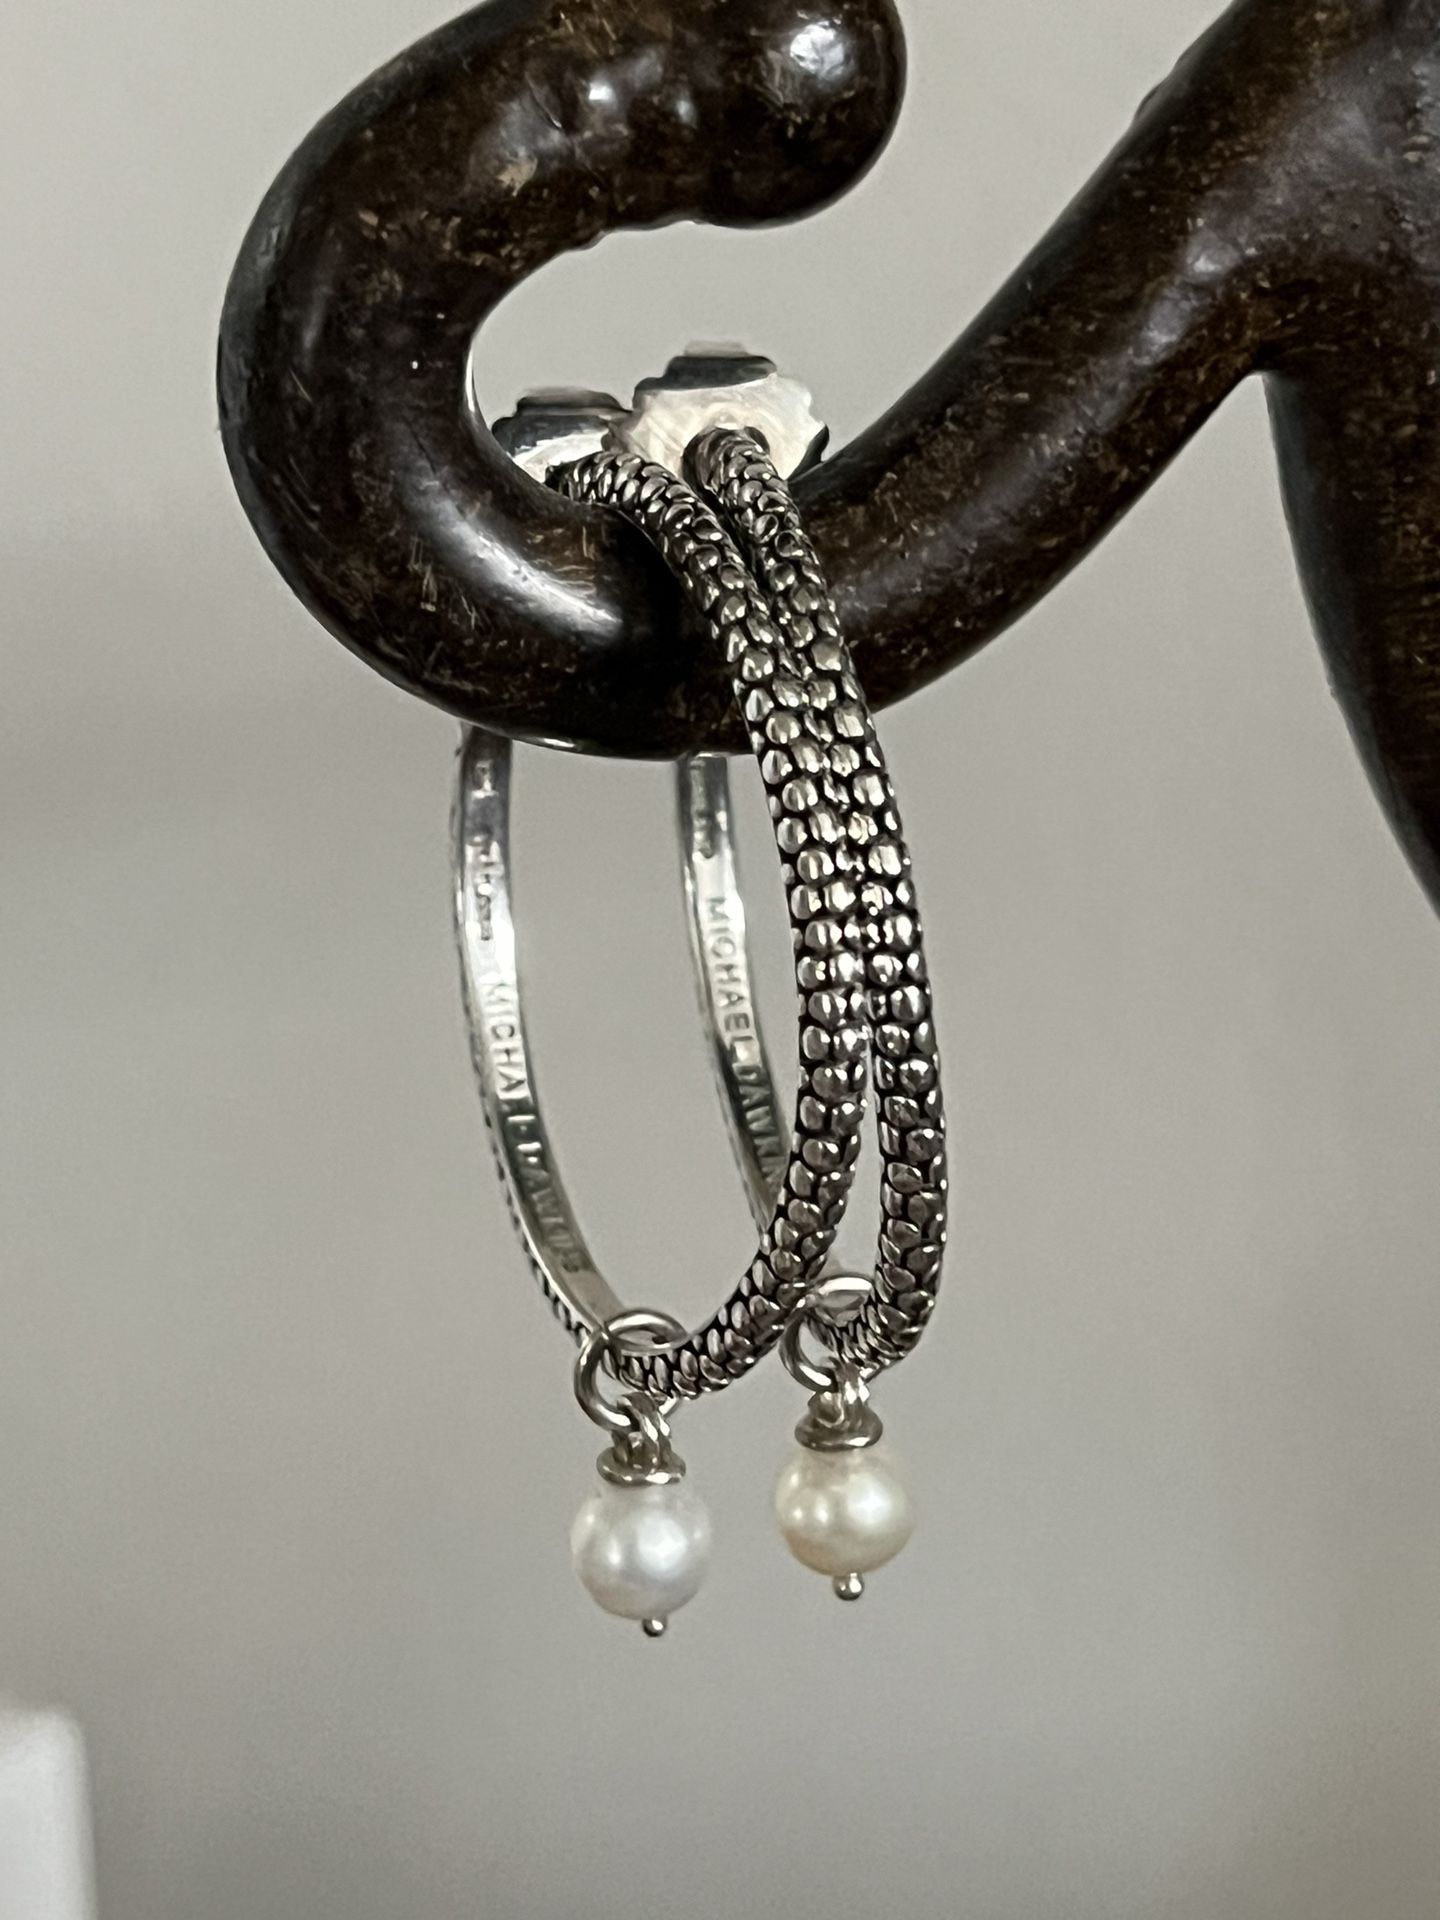 Designer Michael Dawkins Sterling Silver Snake Pattern Hoop Earrings w/Removable Pearl Drops Org. $85